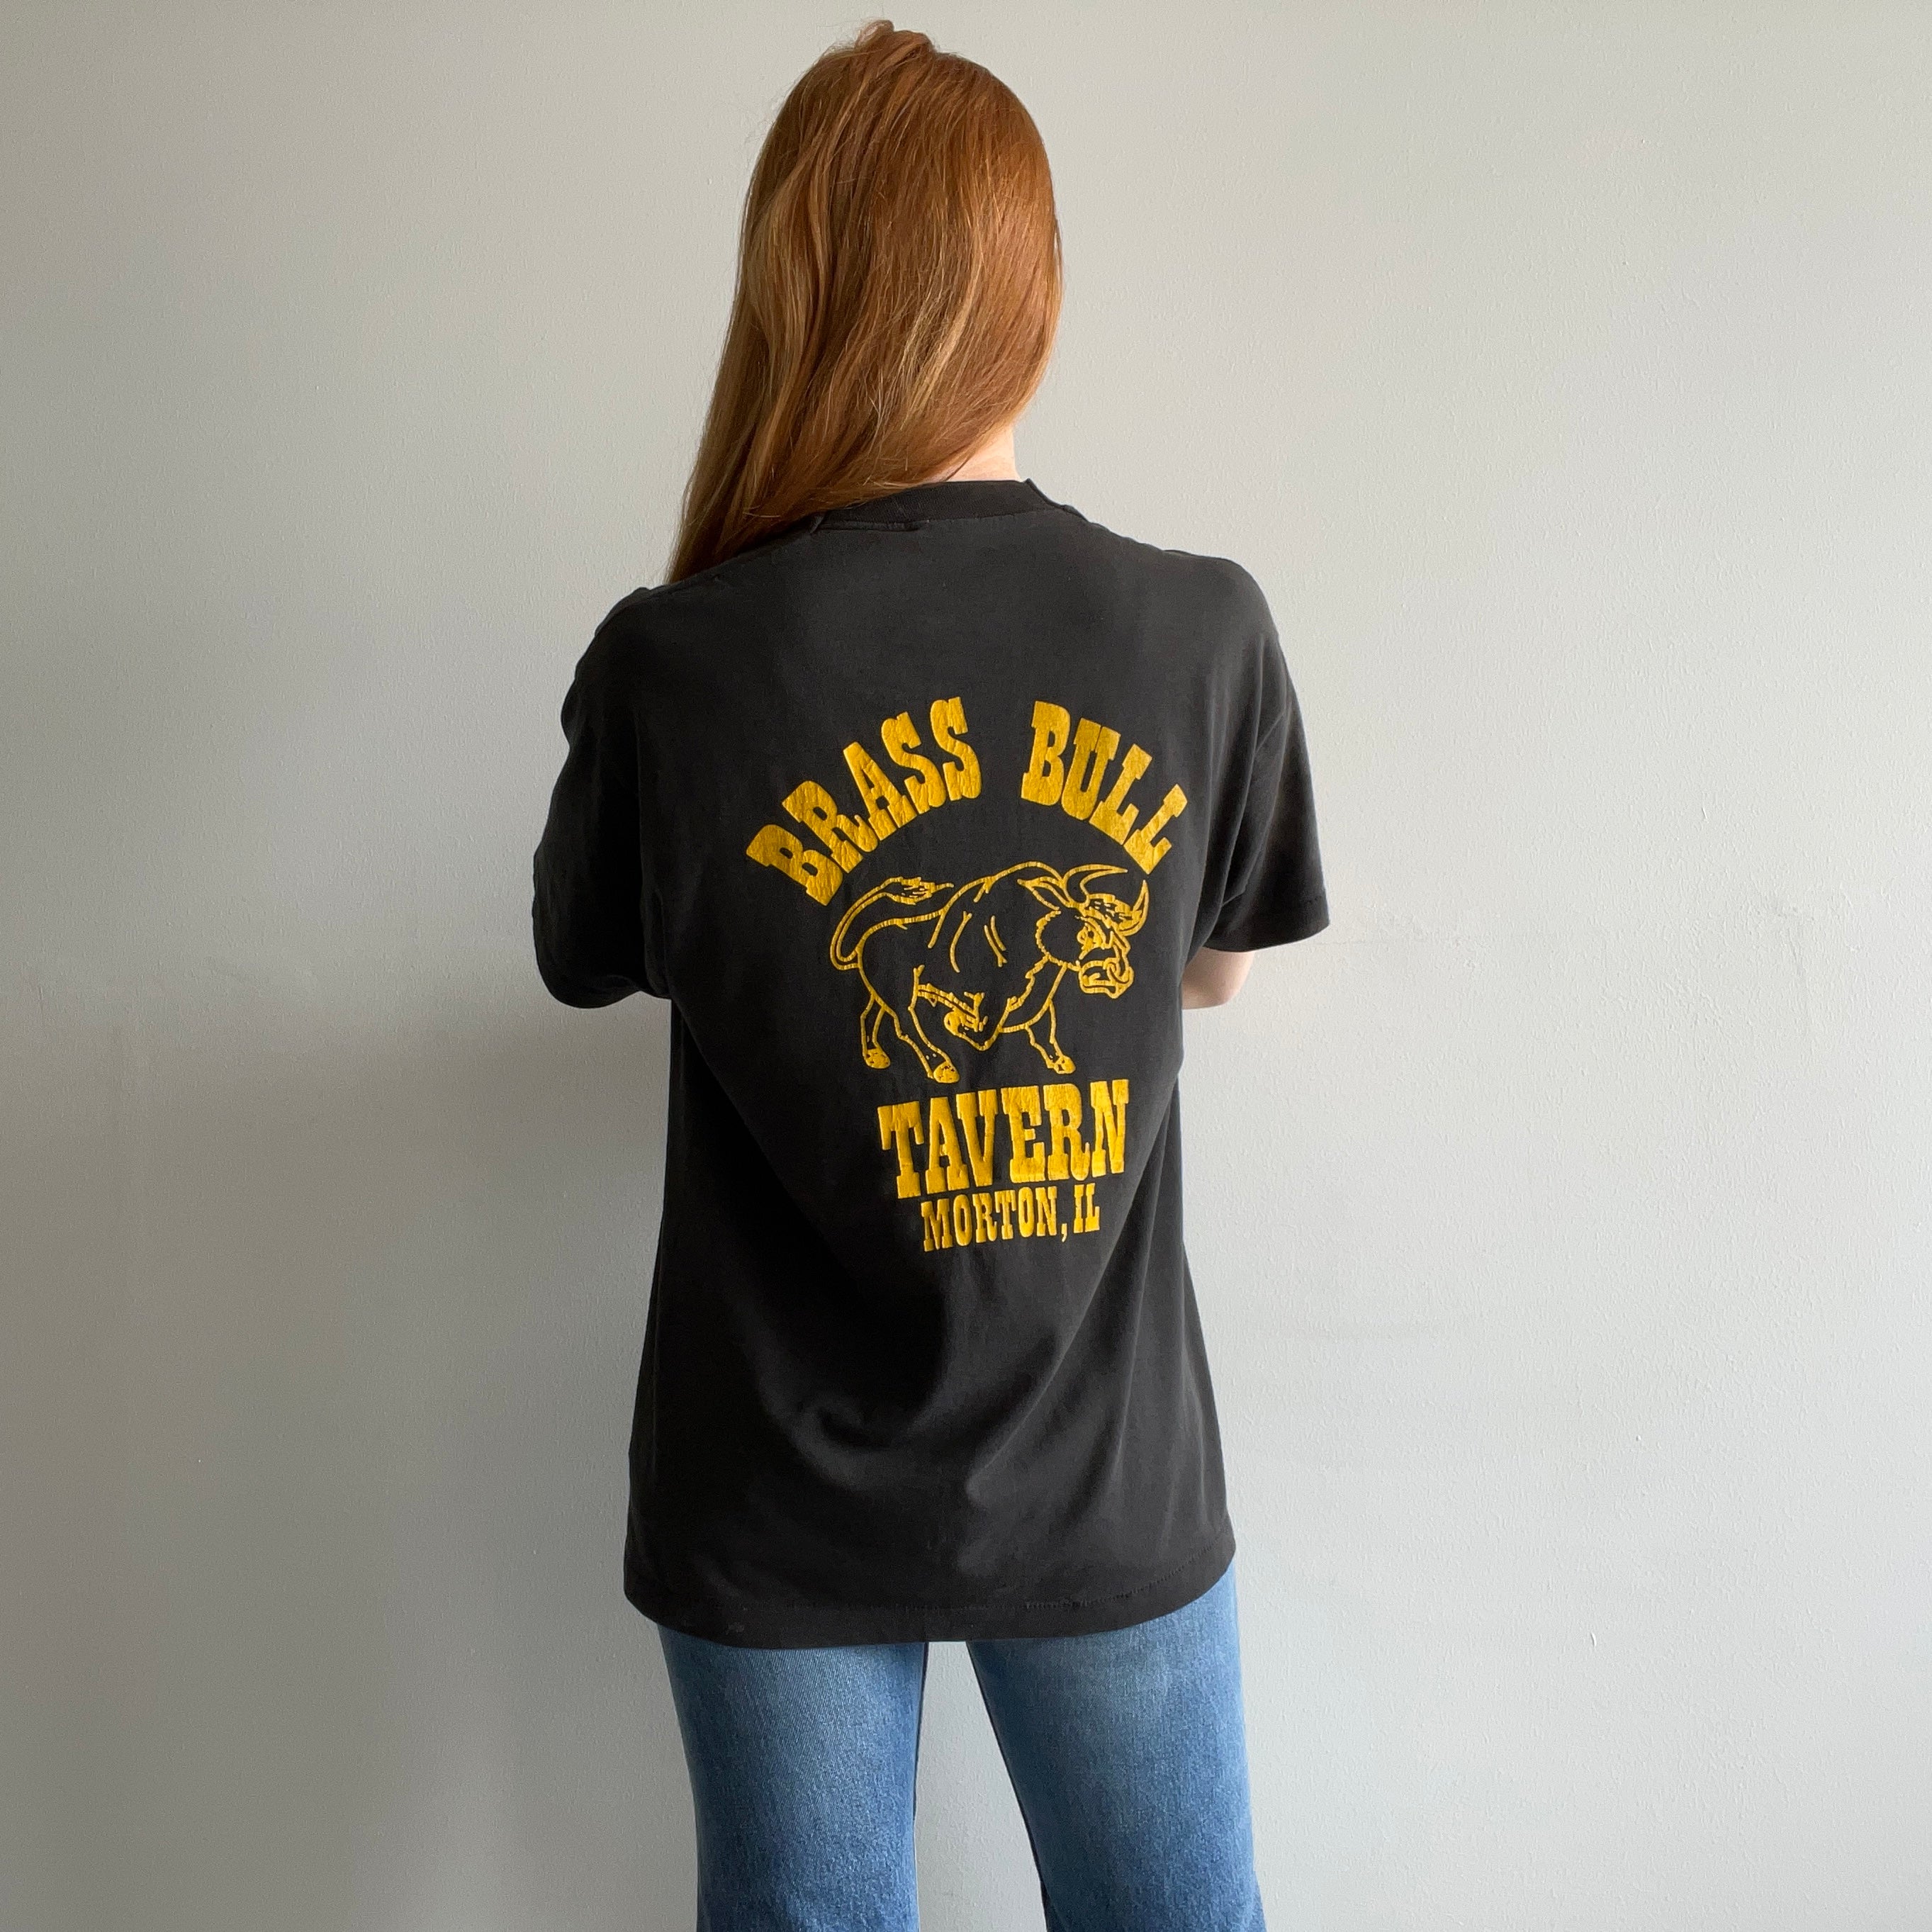 1980s Brass Bull Tavern - Morton, Illinois - Rad T-Shirt